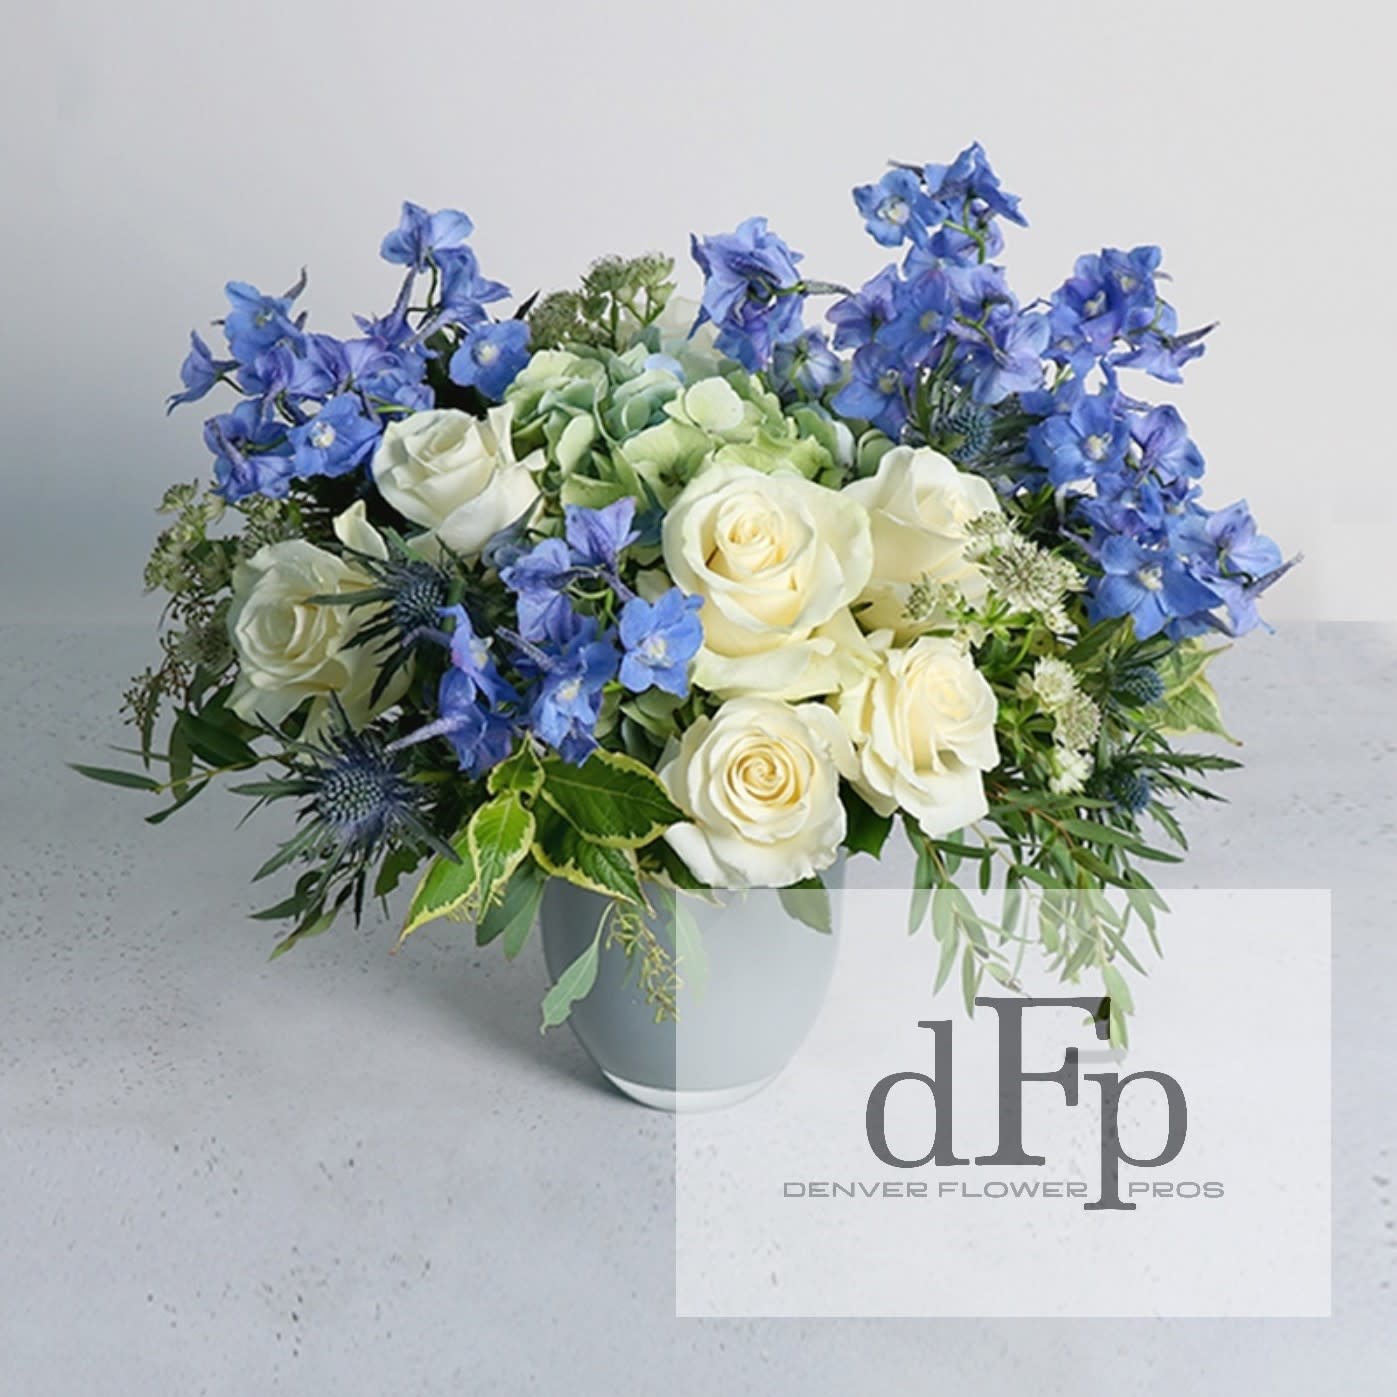 Funeral Flowers & Funeral Flower Arrangements - Denver, CO